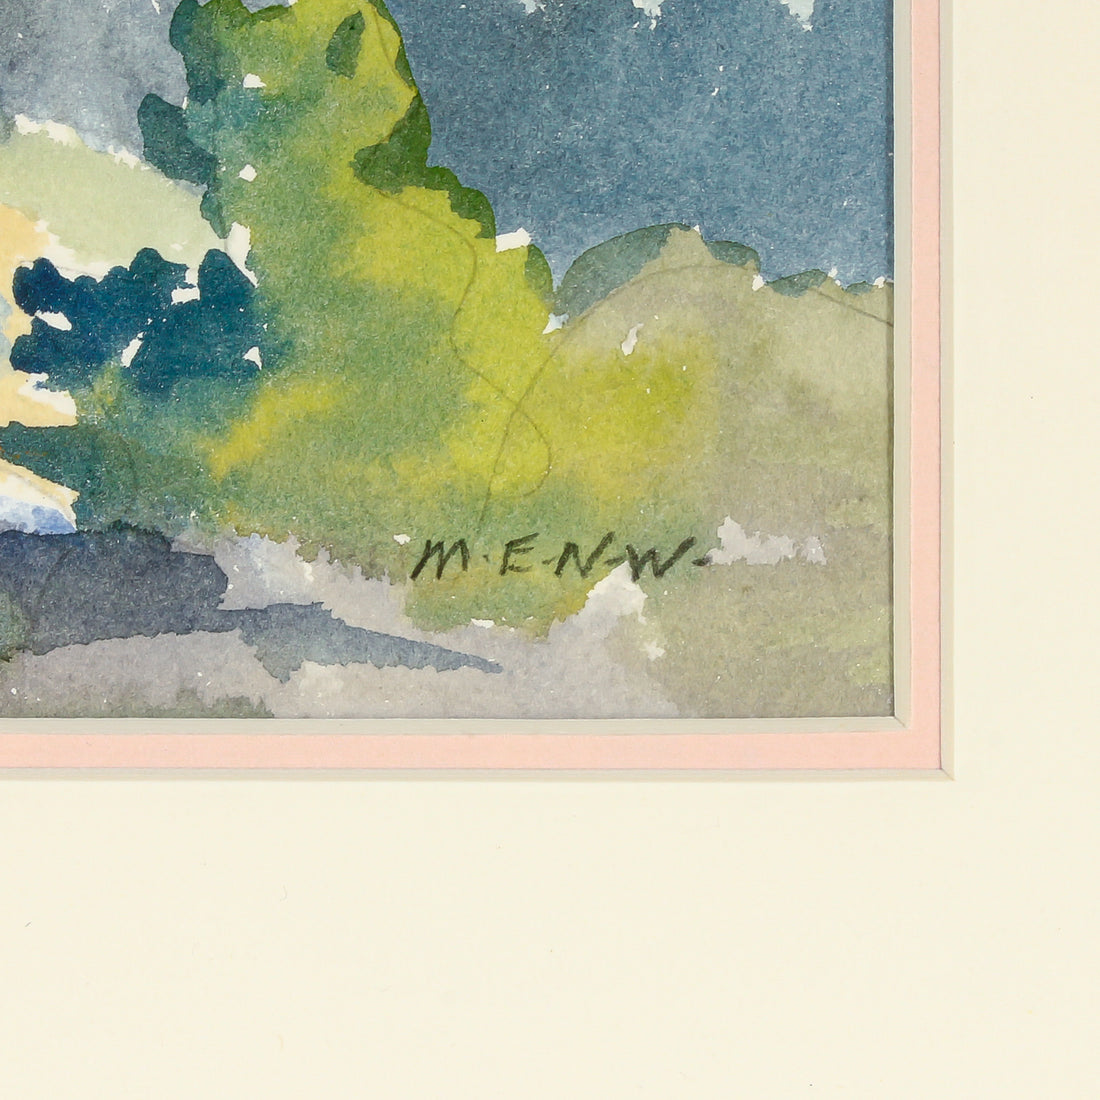 Muriel Elizabeth Newton White - "Lake Temiskaming" - Watercolour on Paper